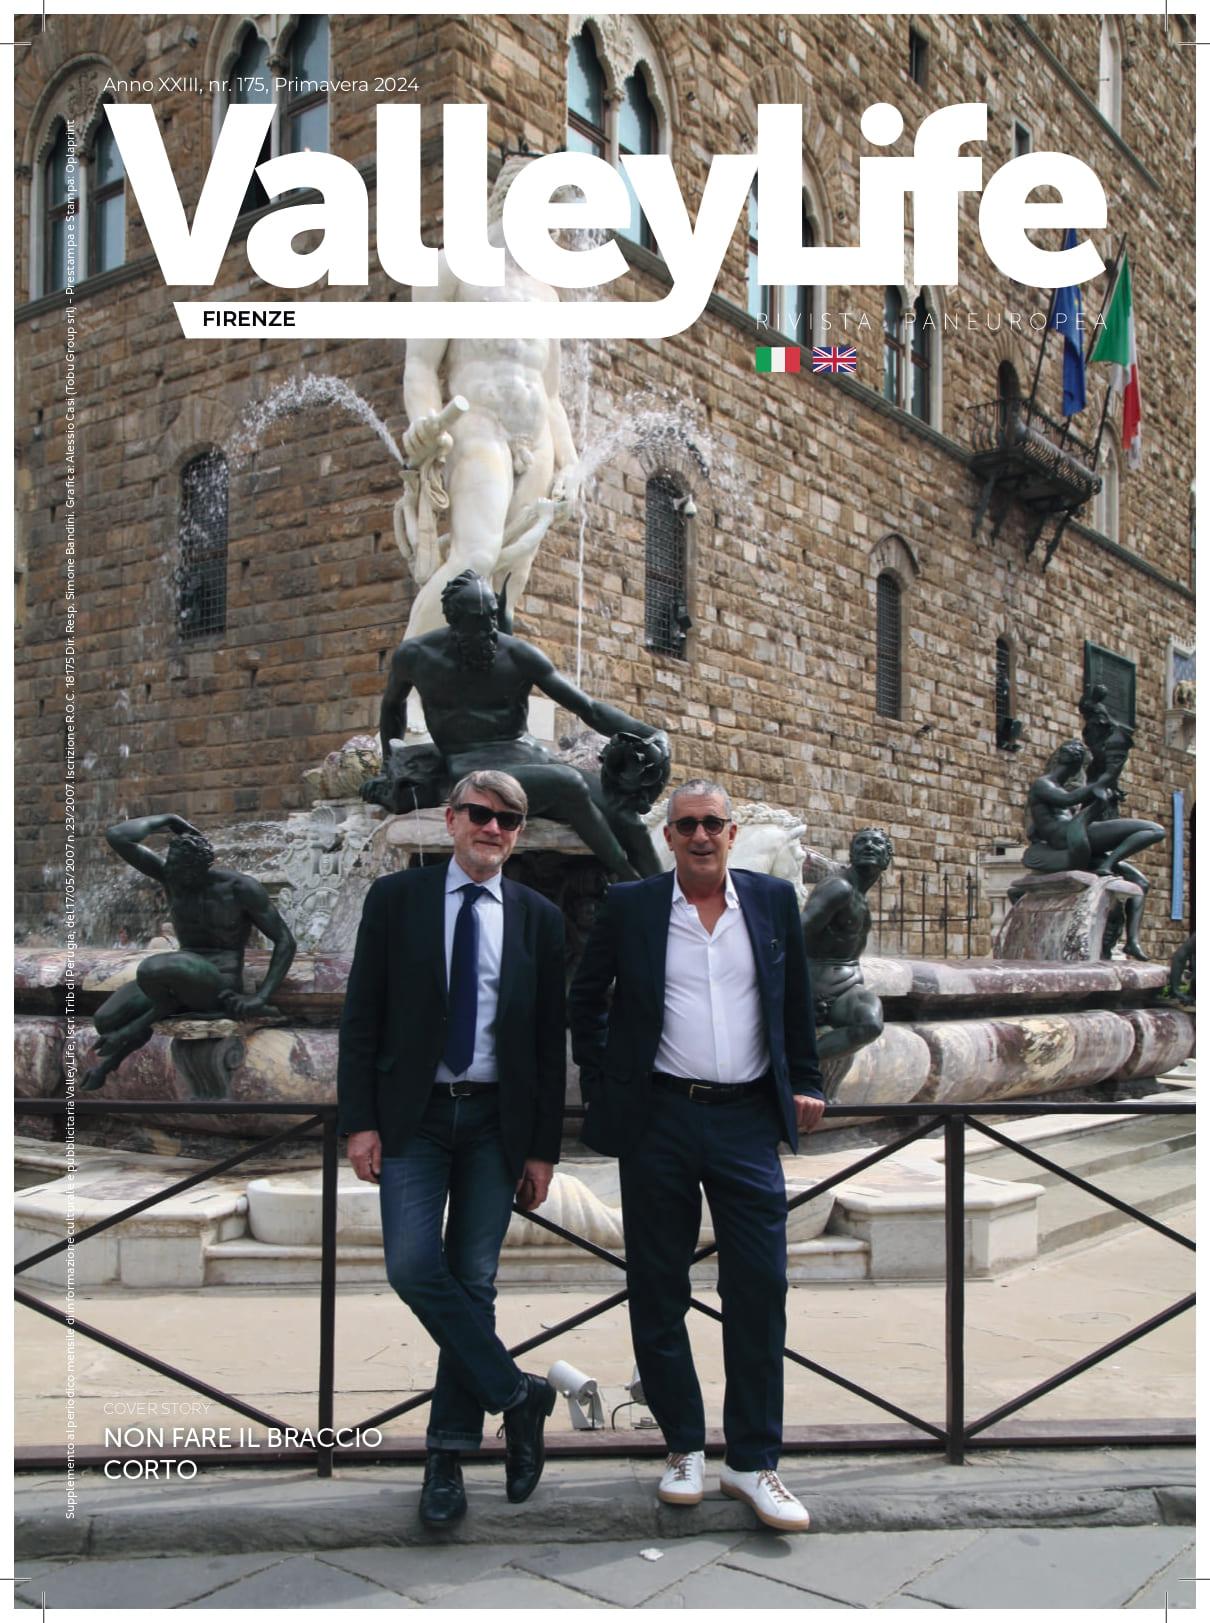 Valley Life “Firenze” primavera 2024